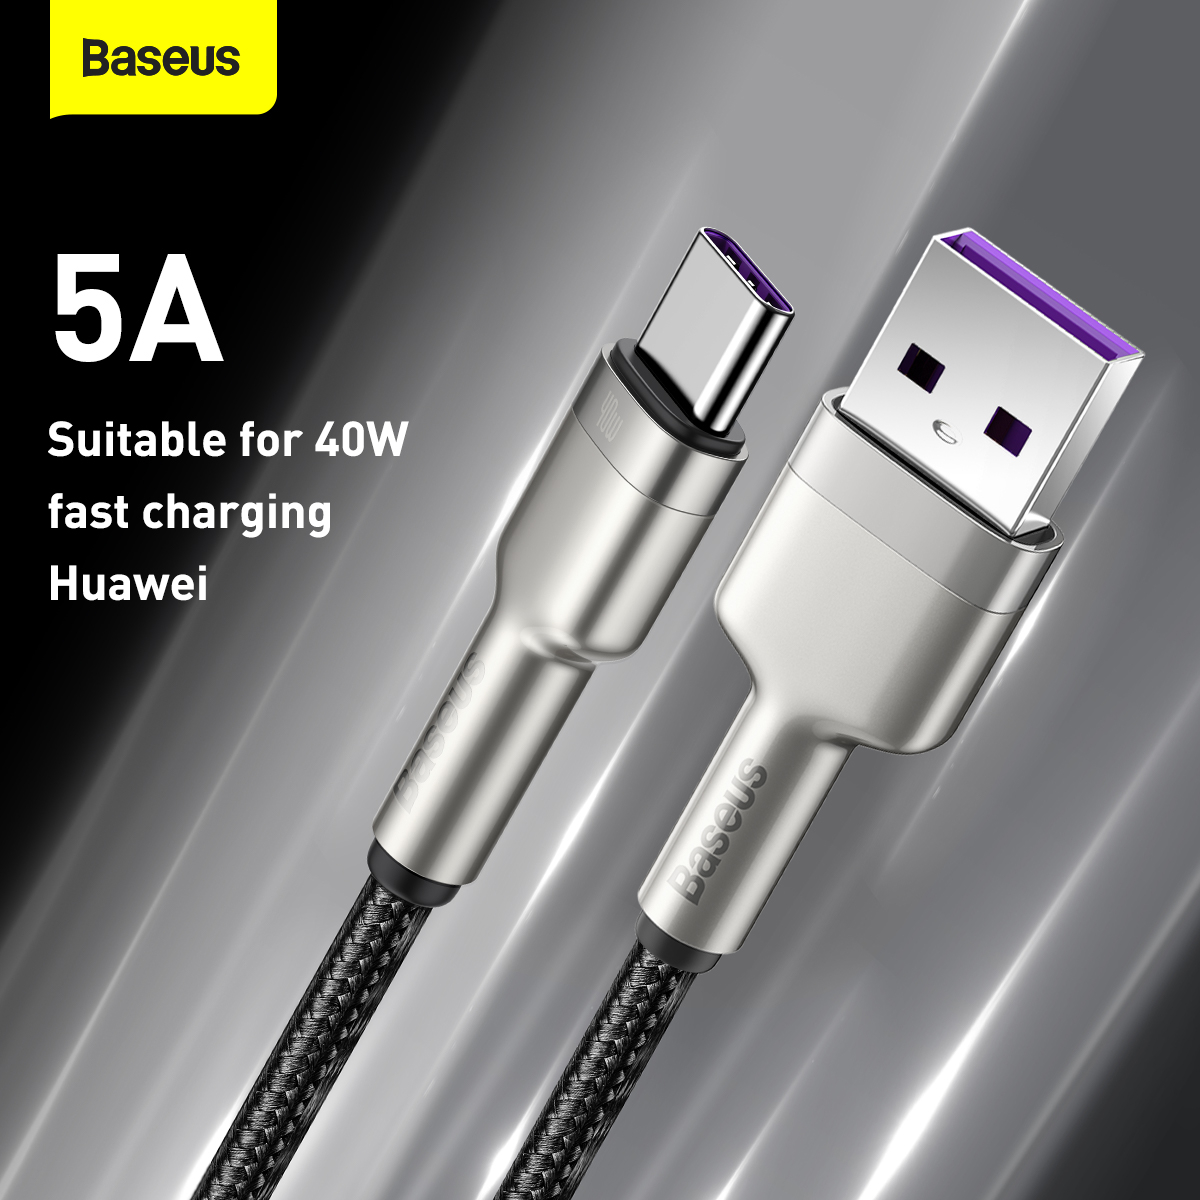 Baseus Cafule USB till USB-C datakabel, 40W, 5A, 2m, svart